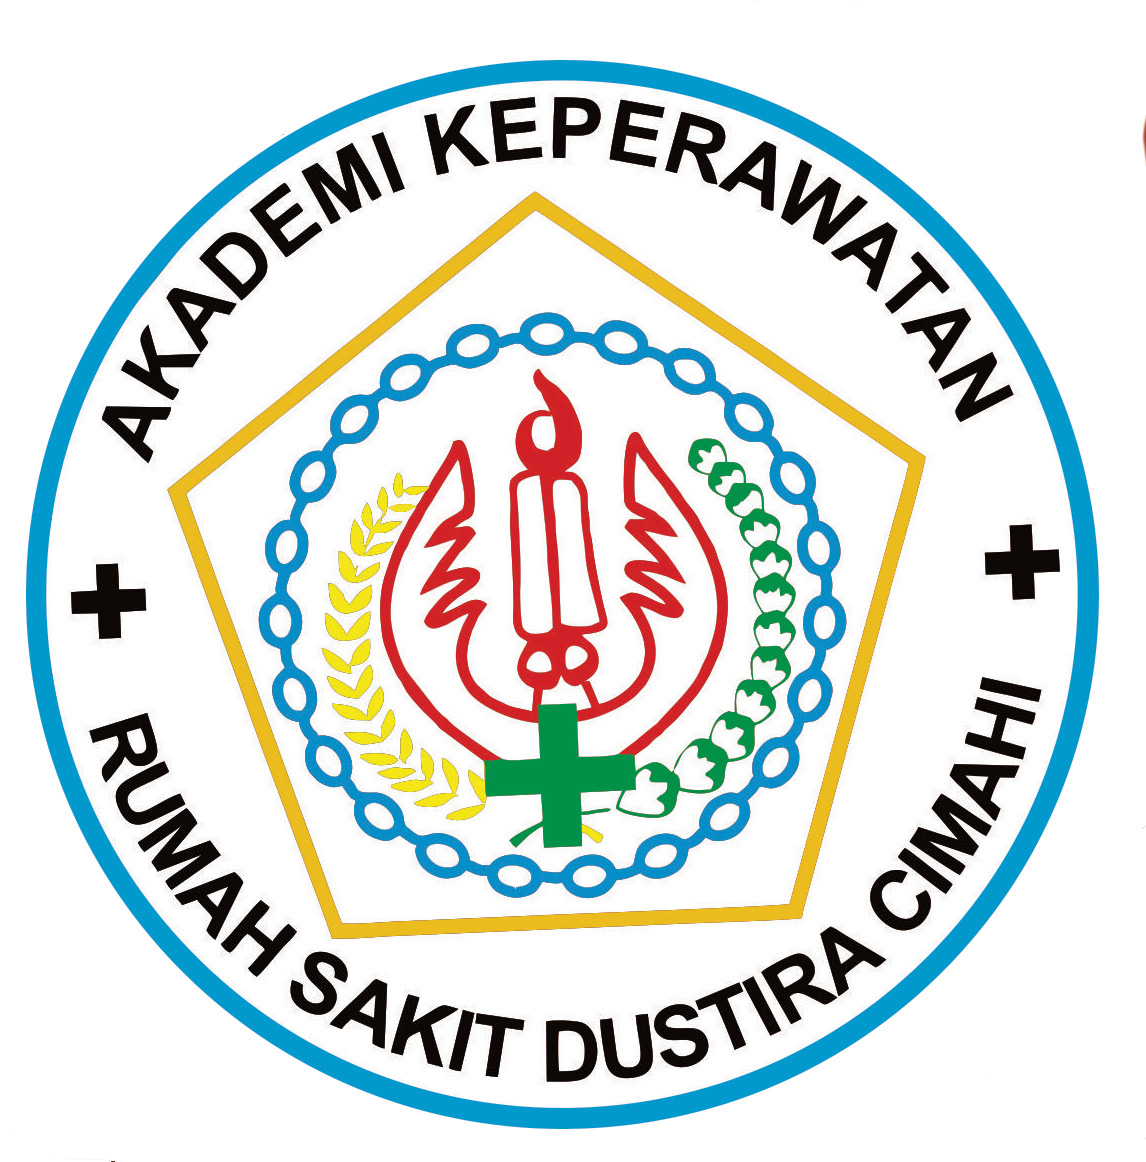 Akademi Keperawatan RS Dustira